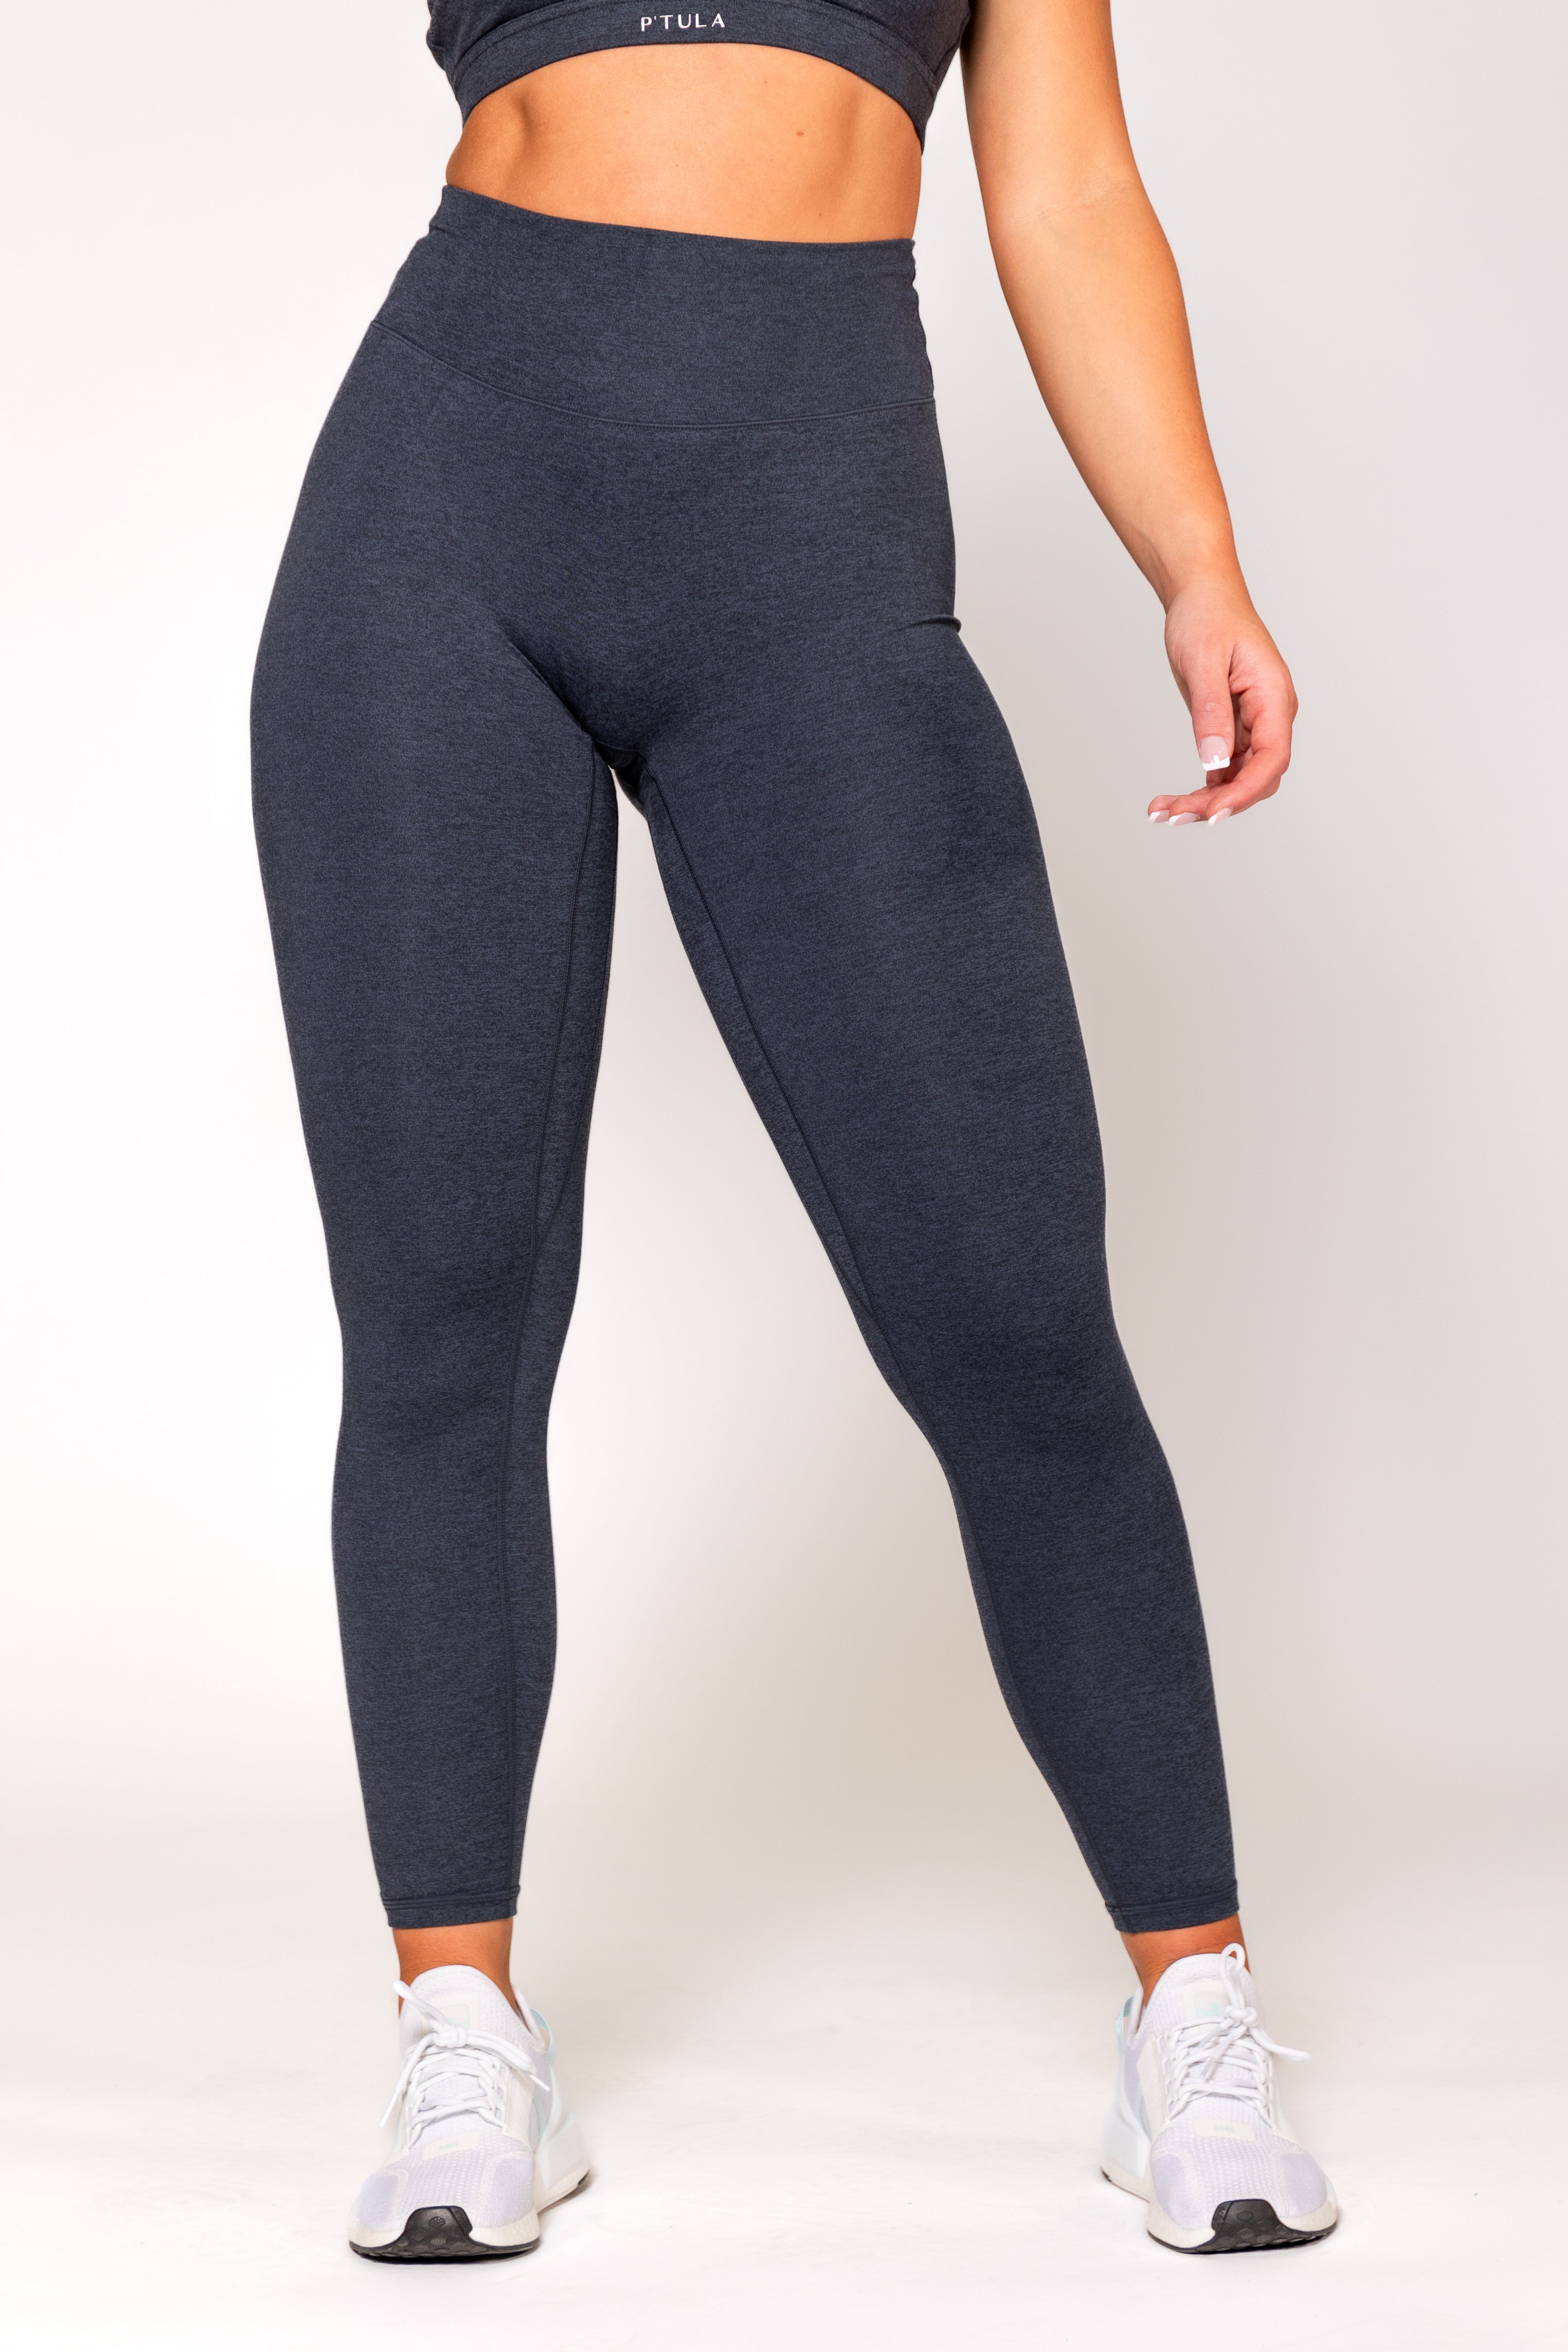 P'tula, Pants & Jumpsuits, Ptula Active Leggings Lavender Desaree Size  Medium